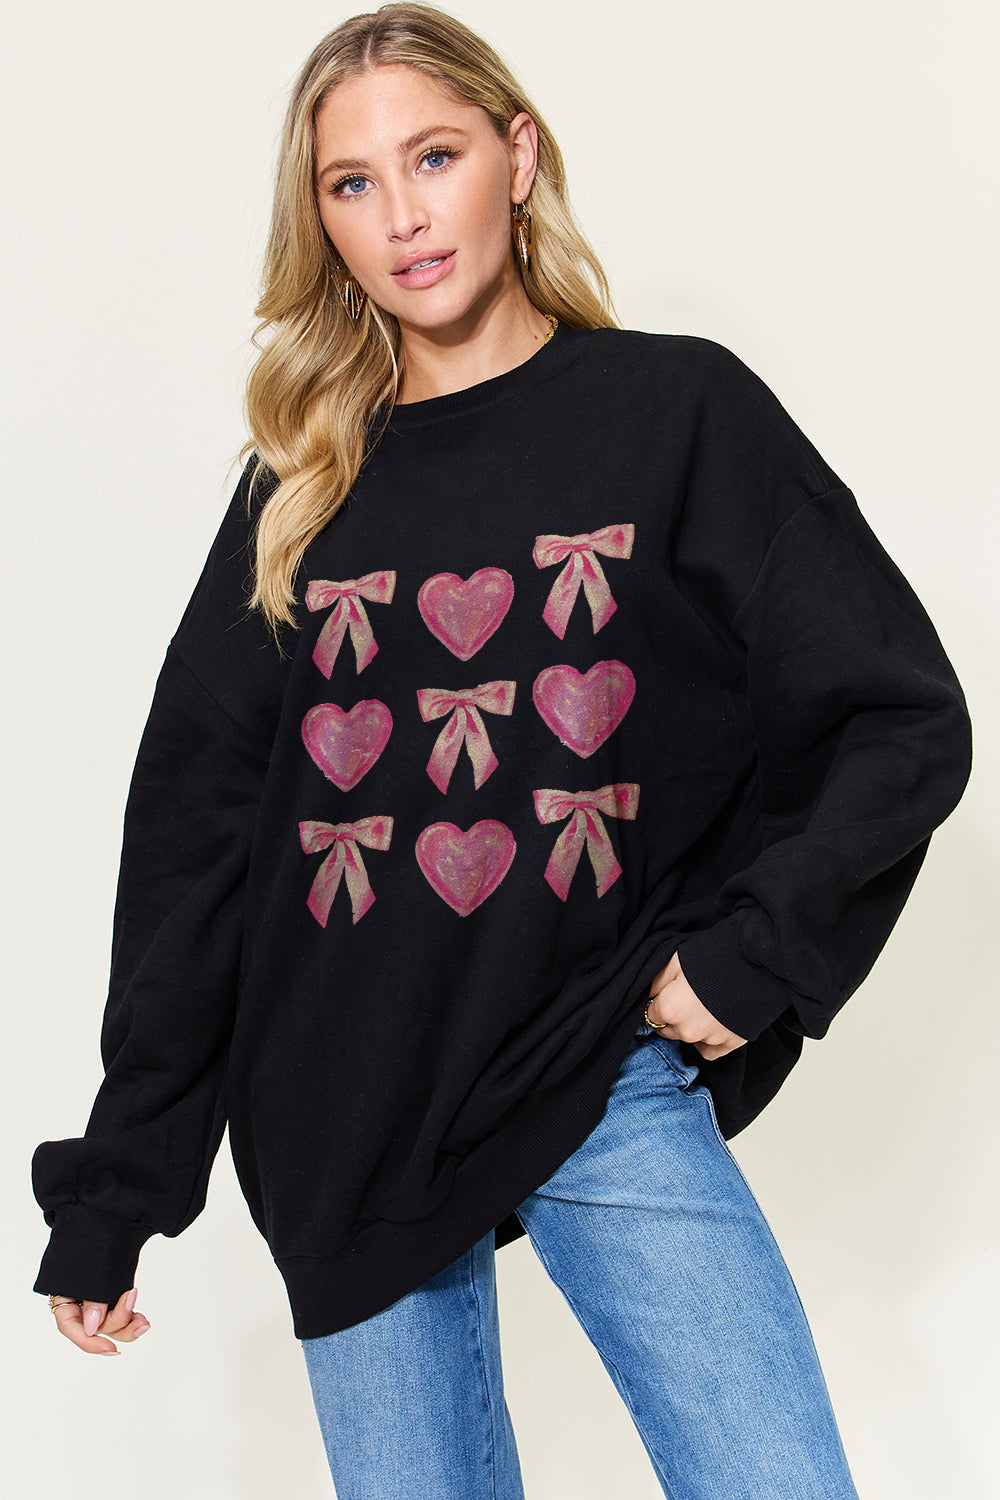 Simply Love Bow & Heart Graphic Long Sleeve Sweatshirt